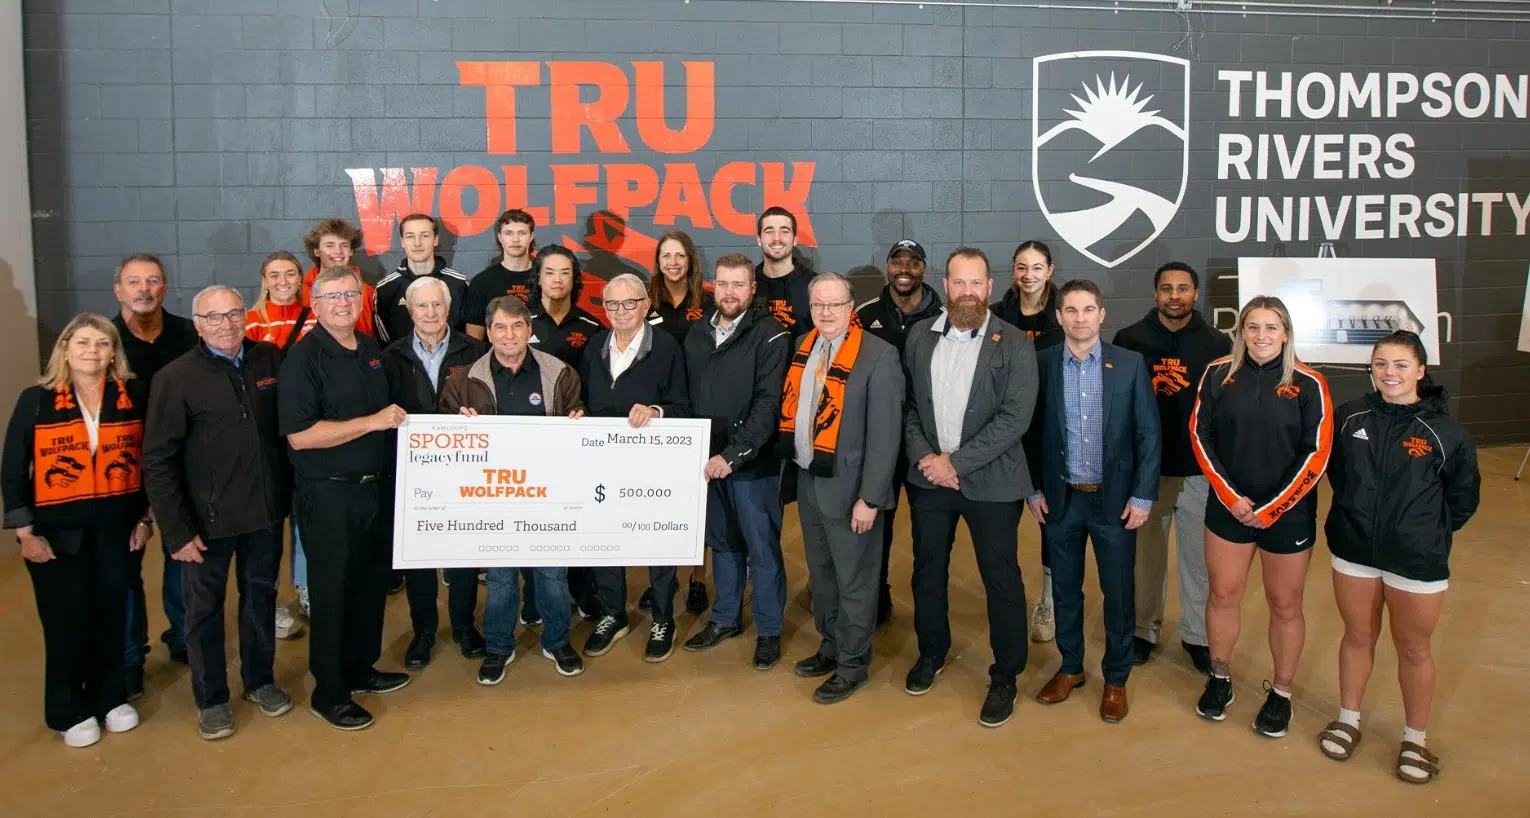 Kamloops Sports Legacy Fund donates $500K to TRU WolfPack